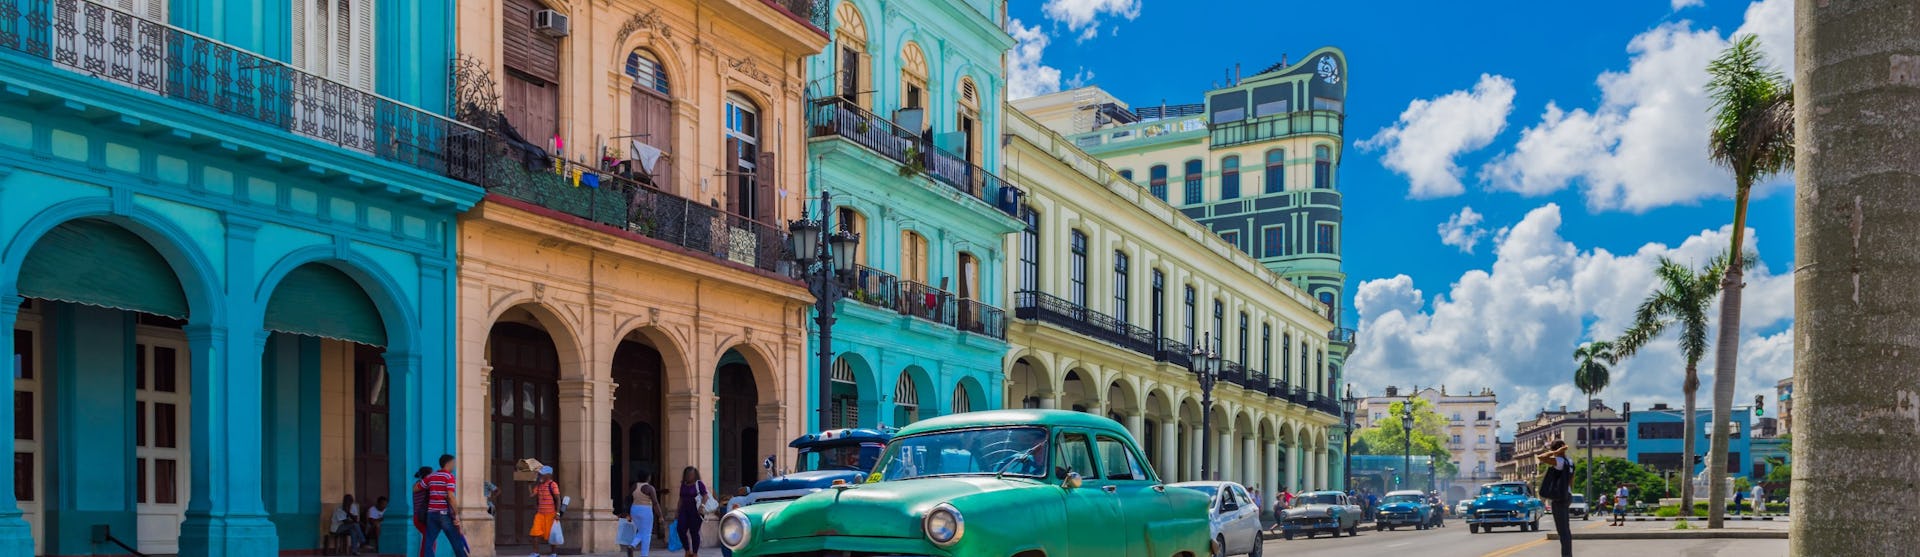 Cuba-Havana-Caribbean-Central-America